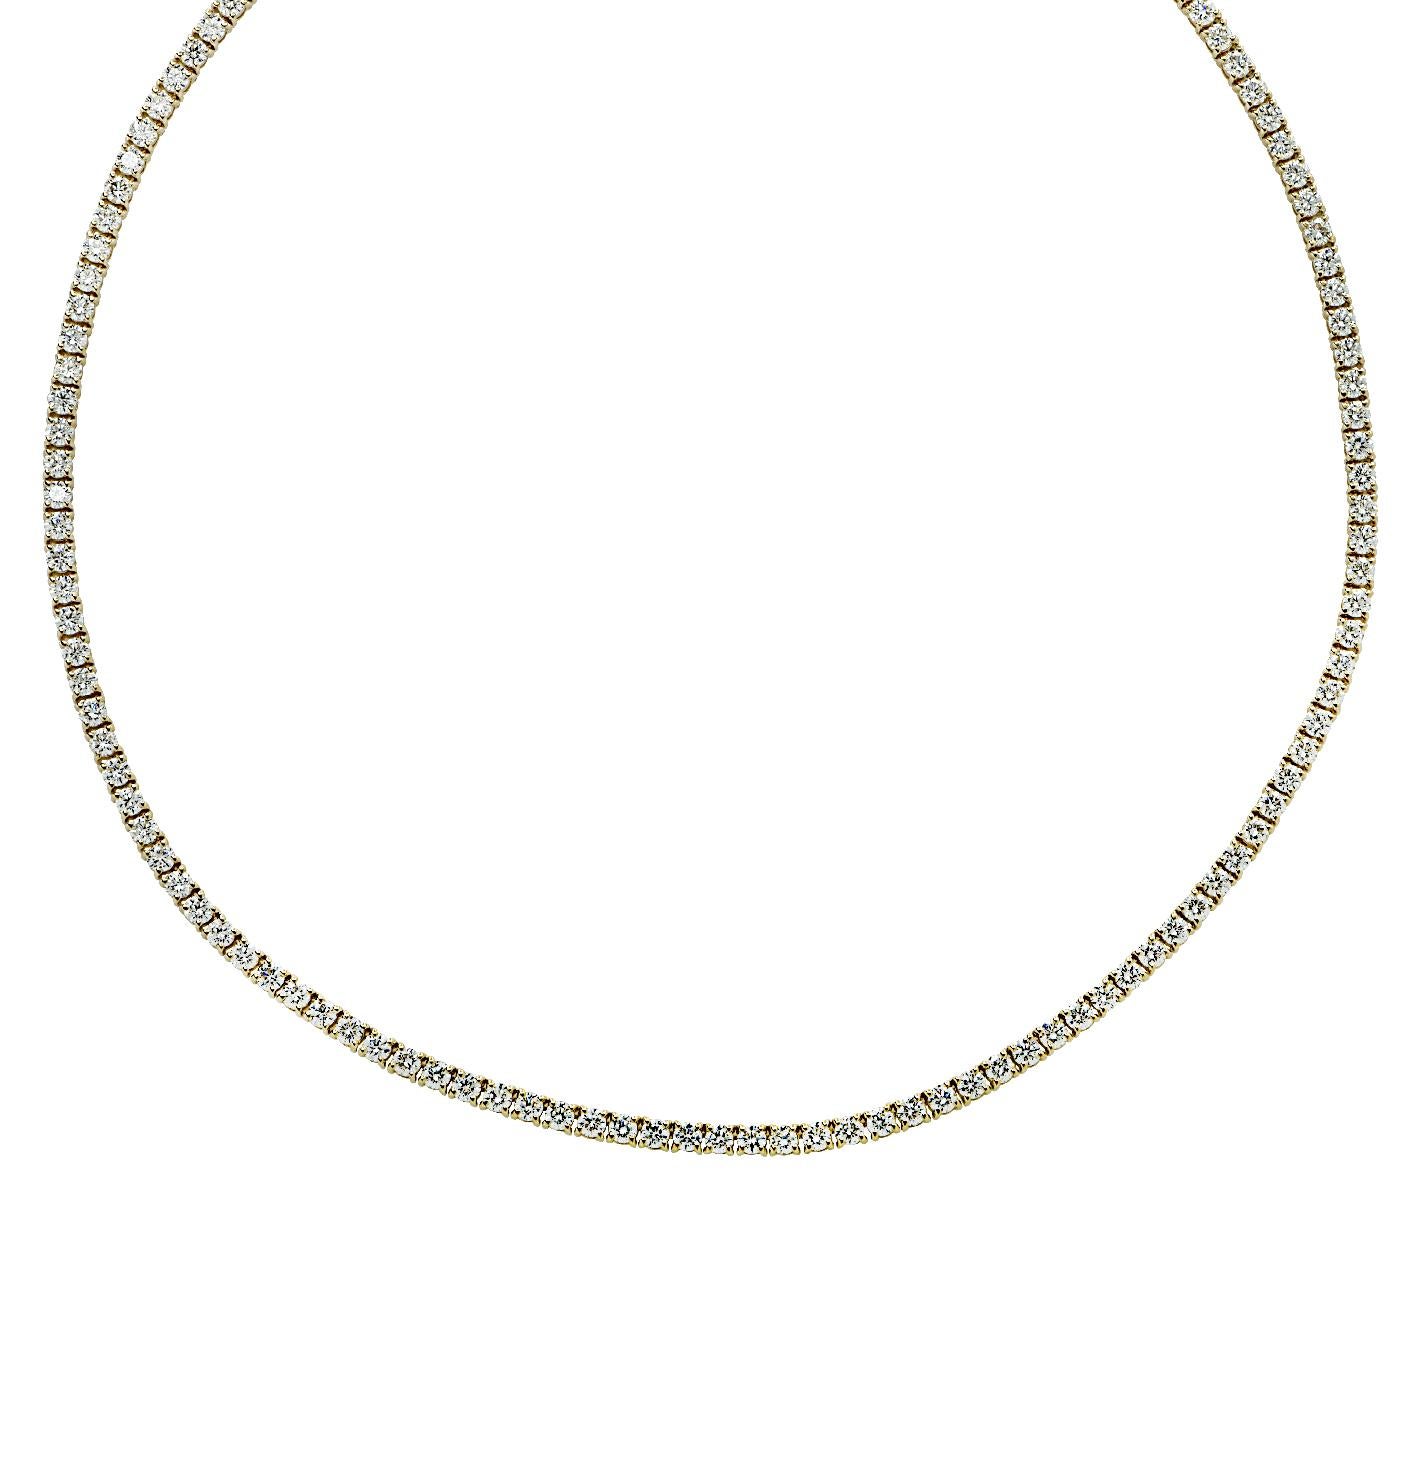 Round Cut Vivid Diamonds 10.47 Carat Straight Line Diamond Tennis Necklace For Sale